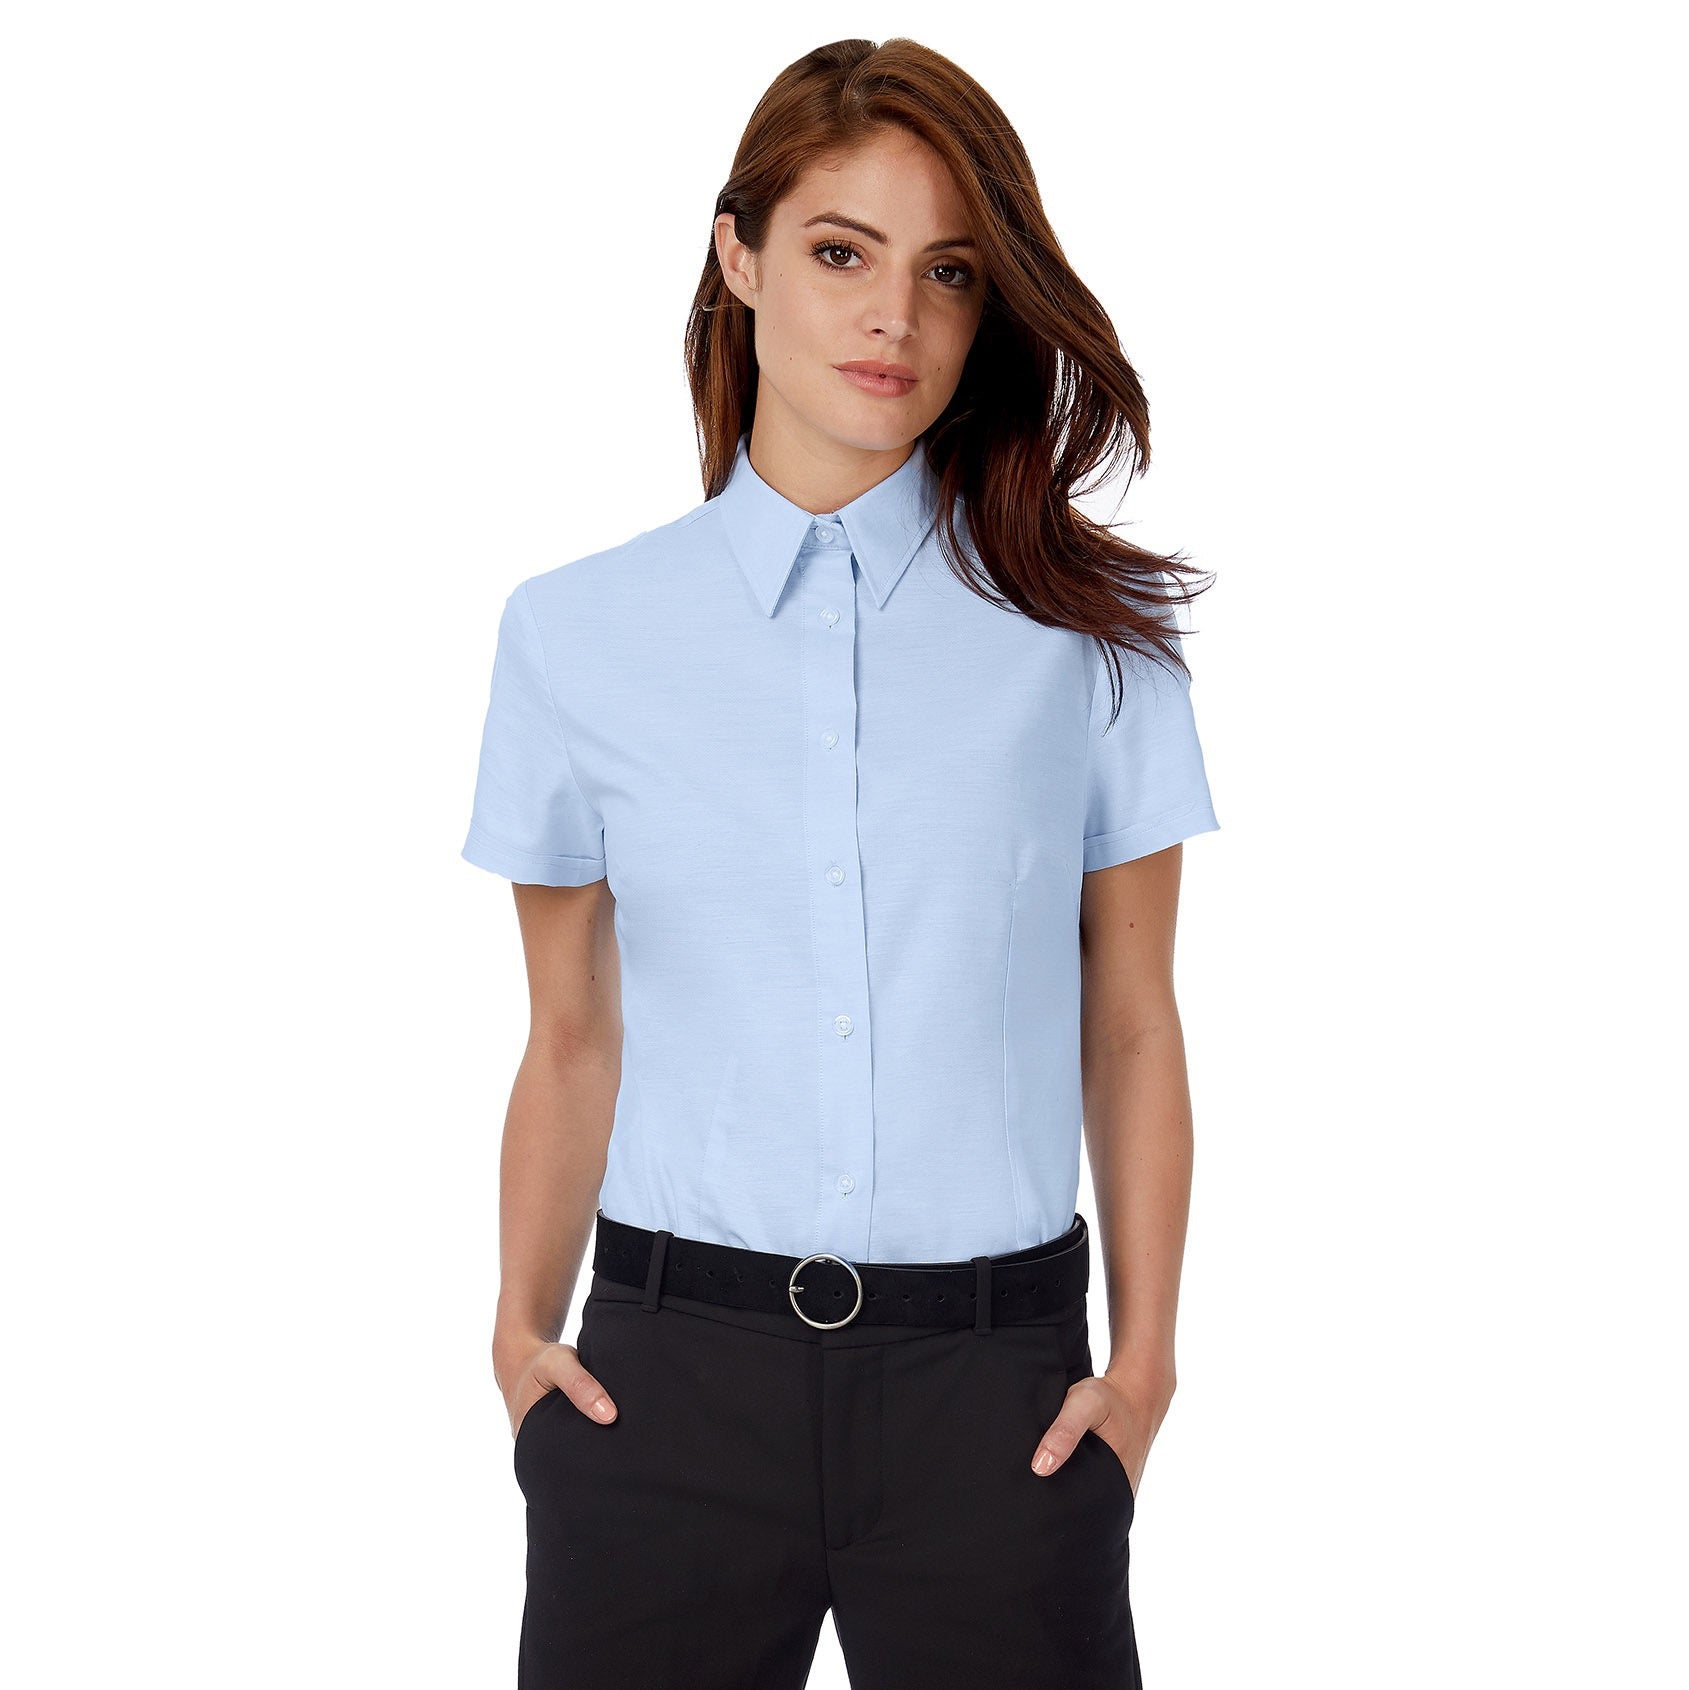 B&C Women's Oxford Short Sleeve Shirt